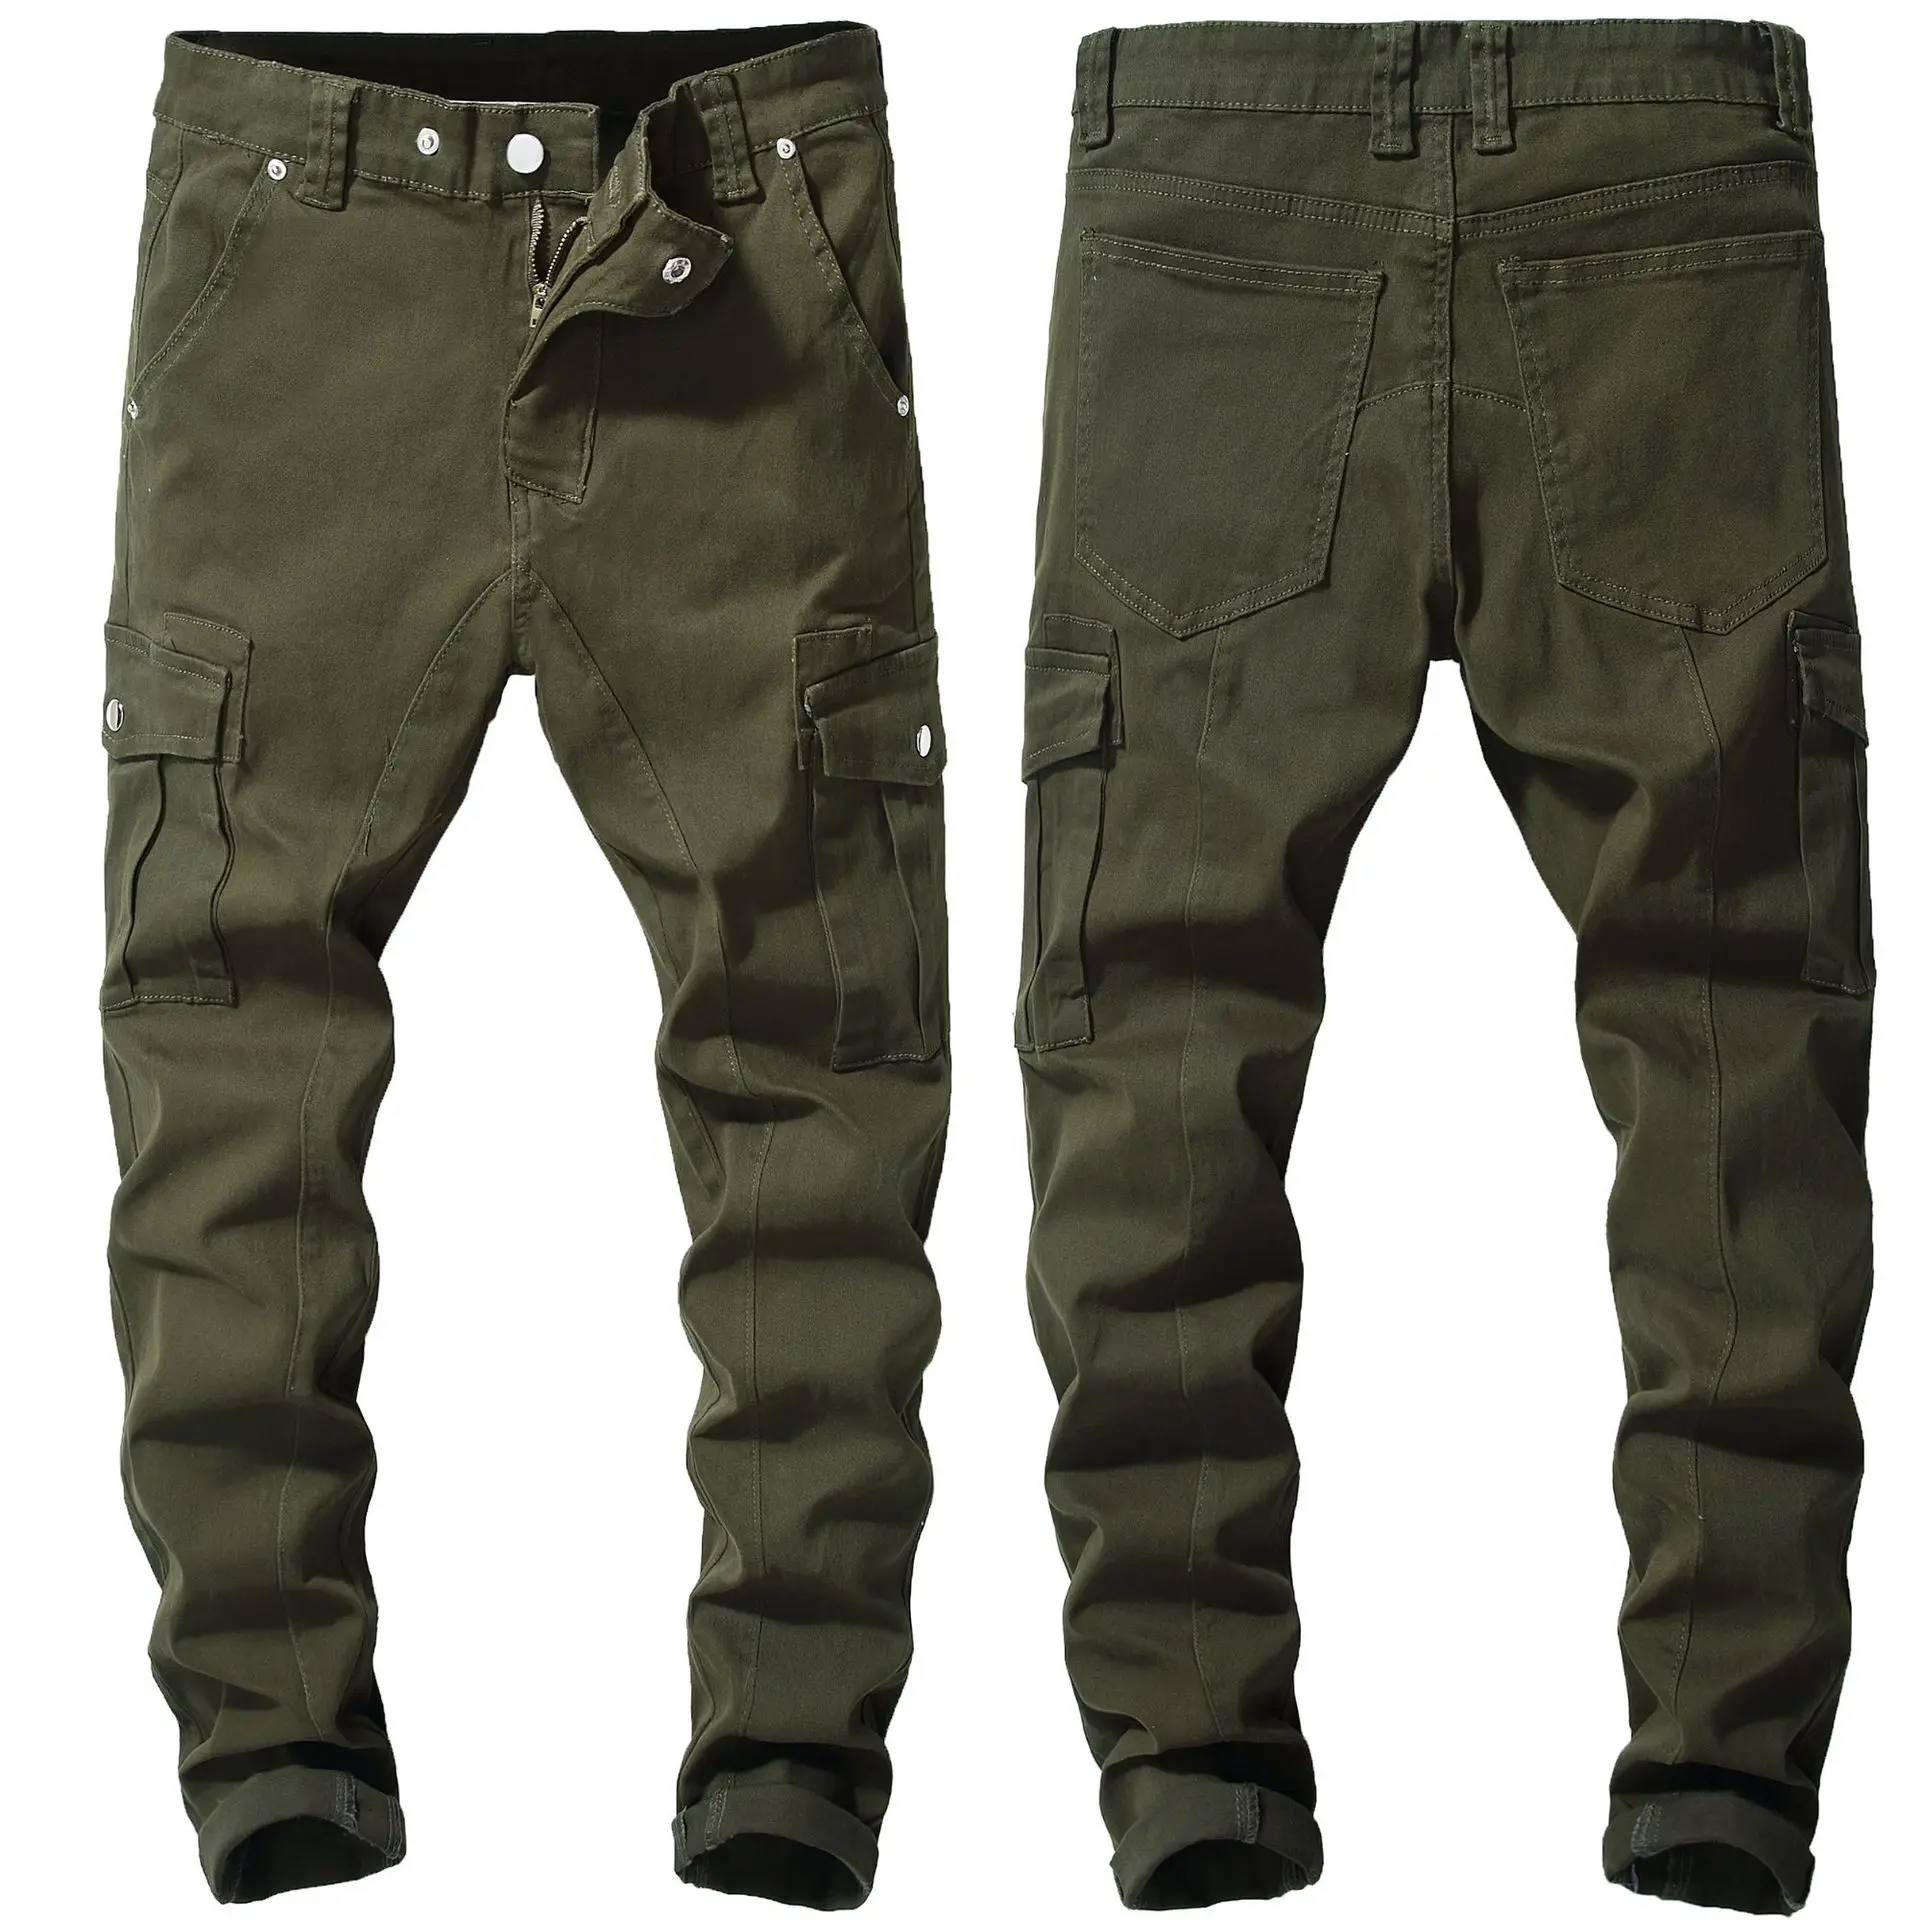 Pantalon Kaki Denim Fabric 98% Cotton 2% Spandex Jeans Fit - Buy Jeans ...